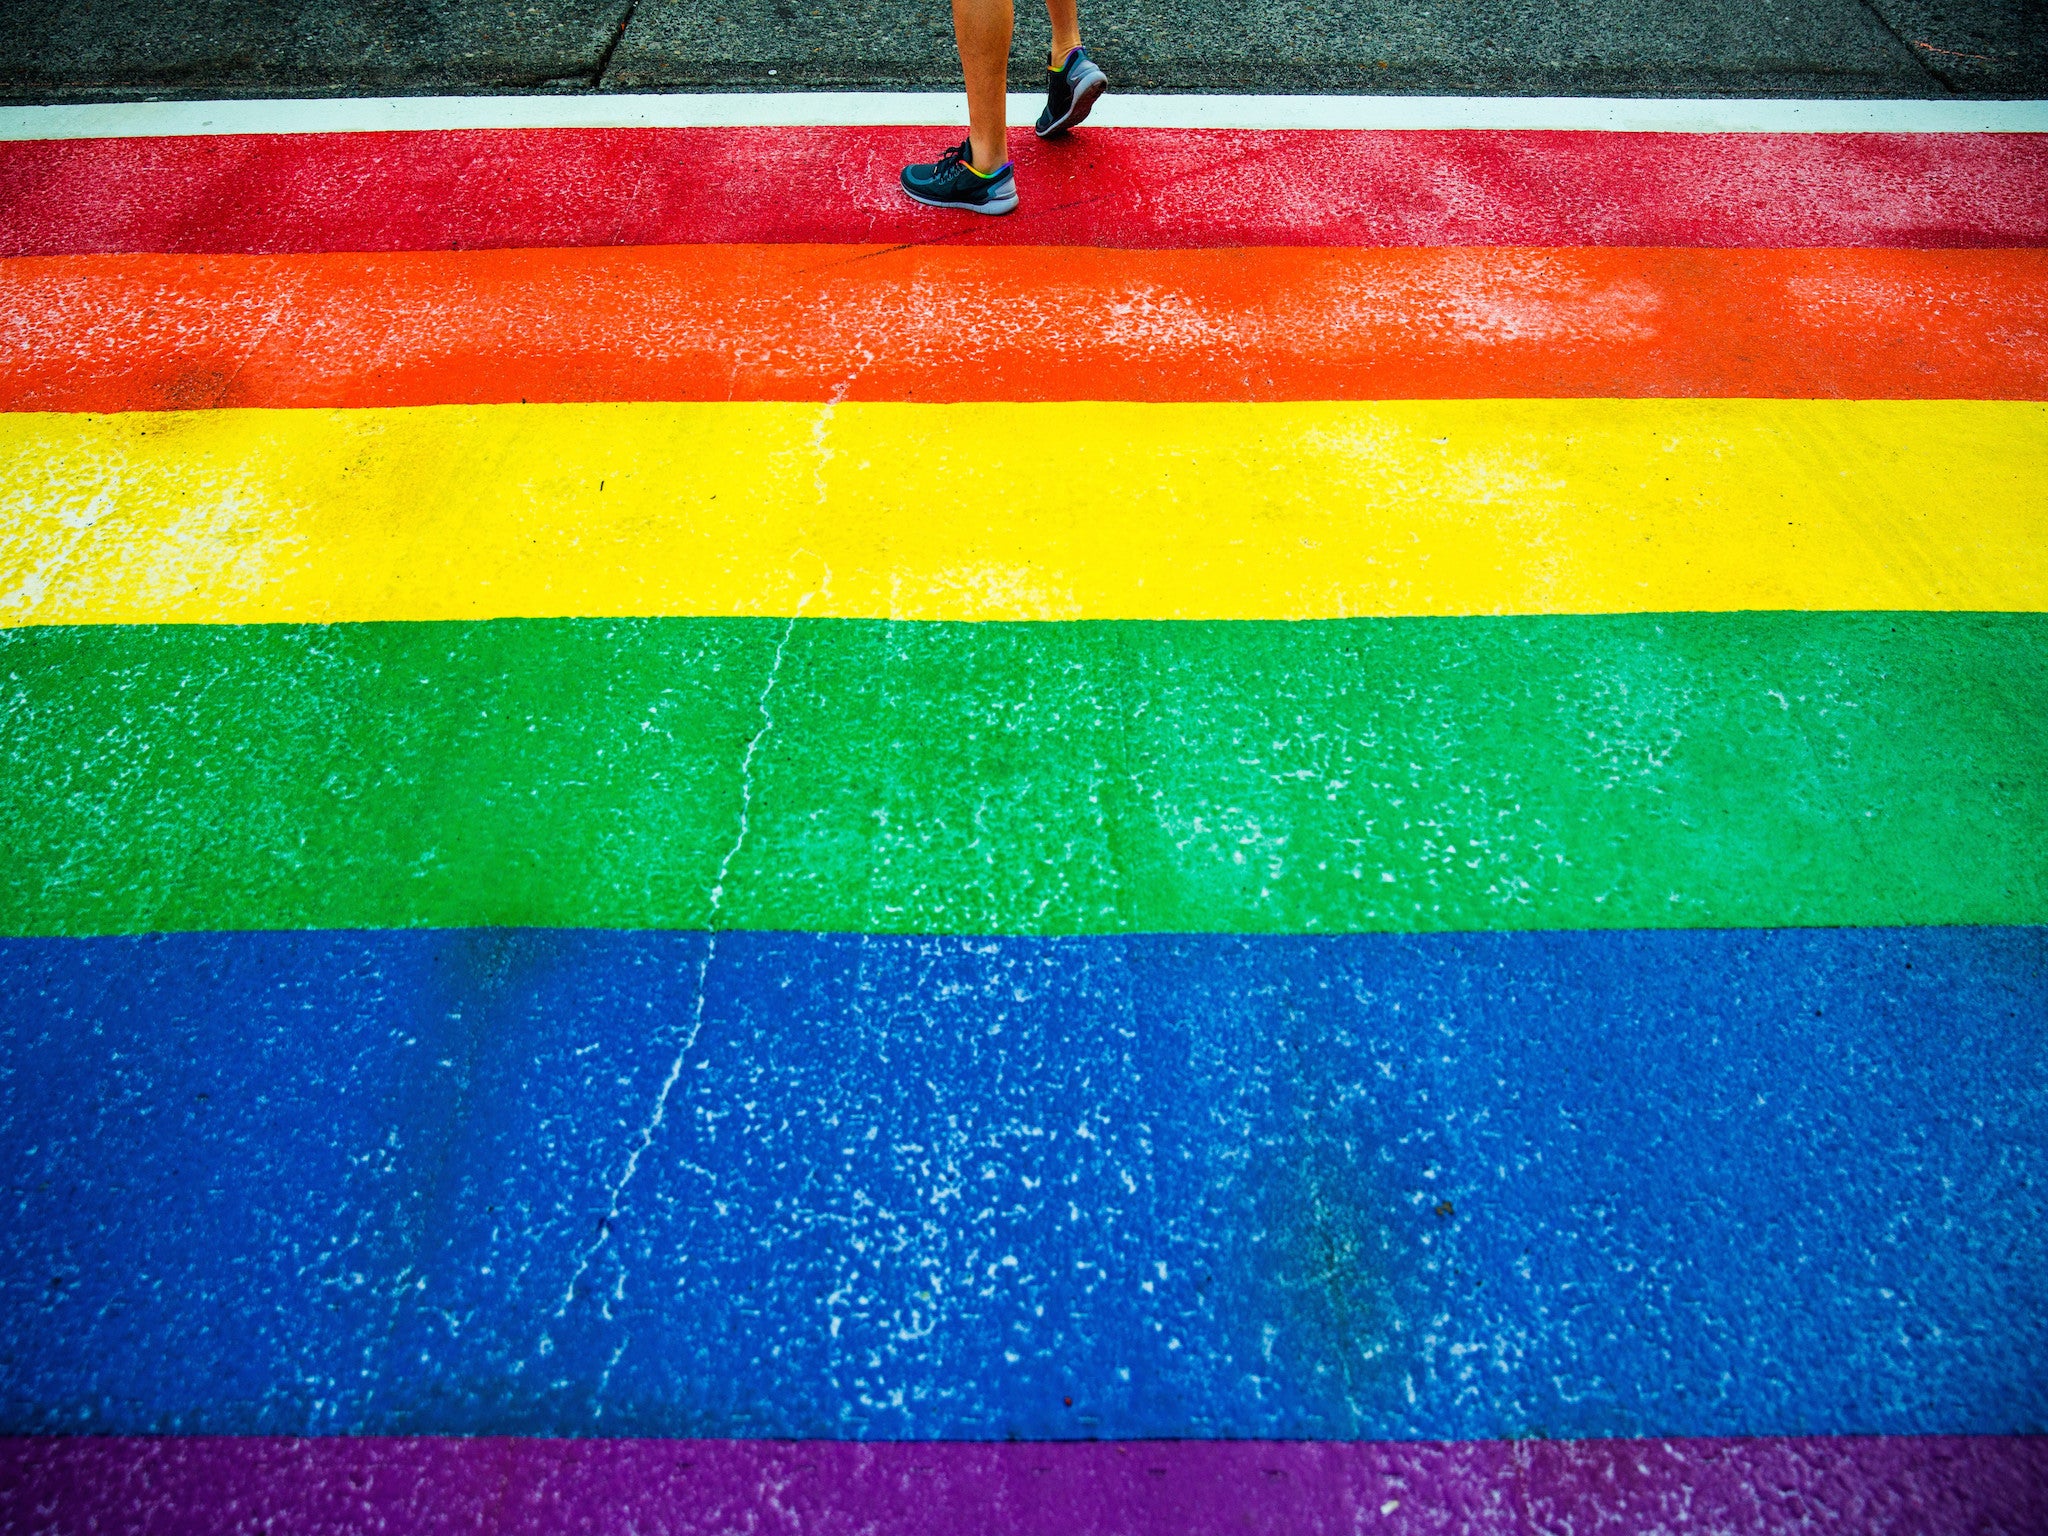 why is the rainbow the gay flag